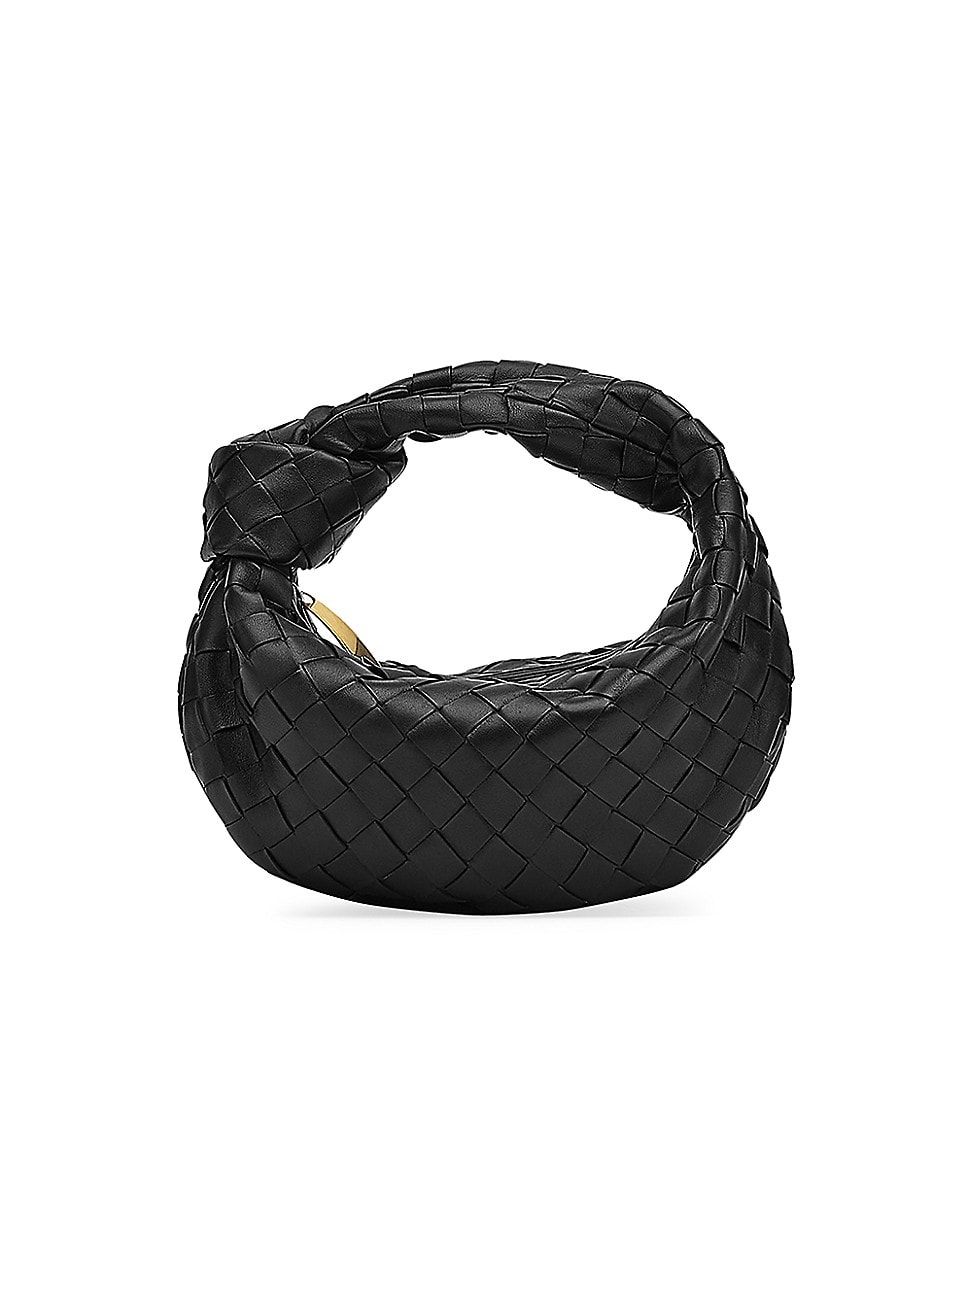 Bottega Veneta Women's Mini Jodie Leather Hobo Bag - Black | Saks Fifth Avenue